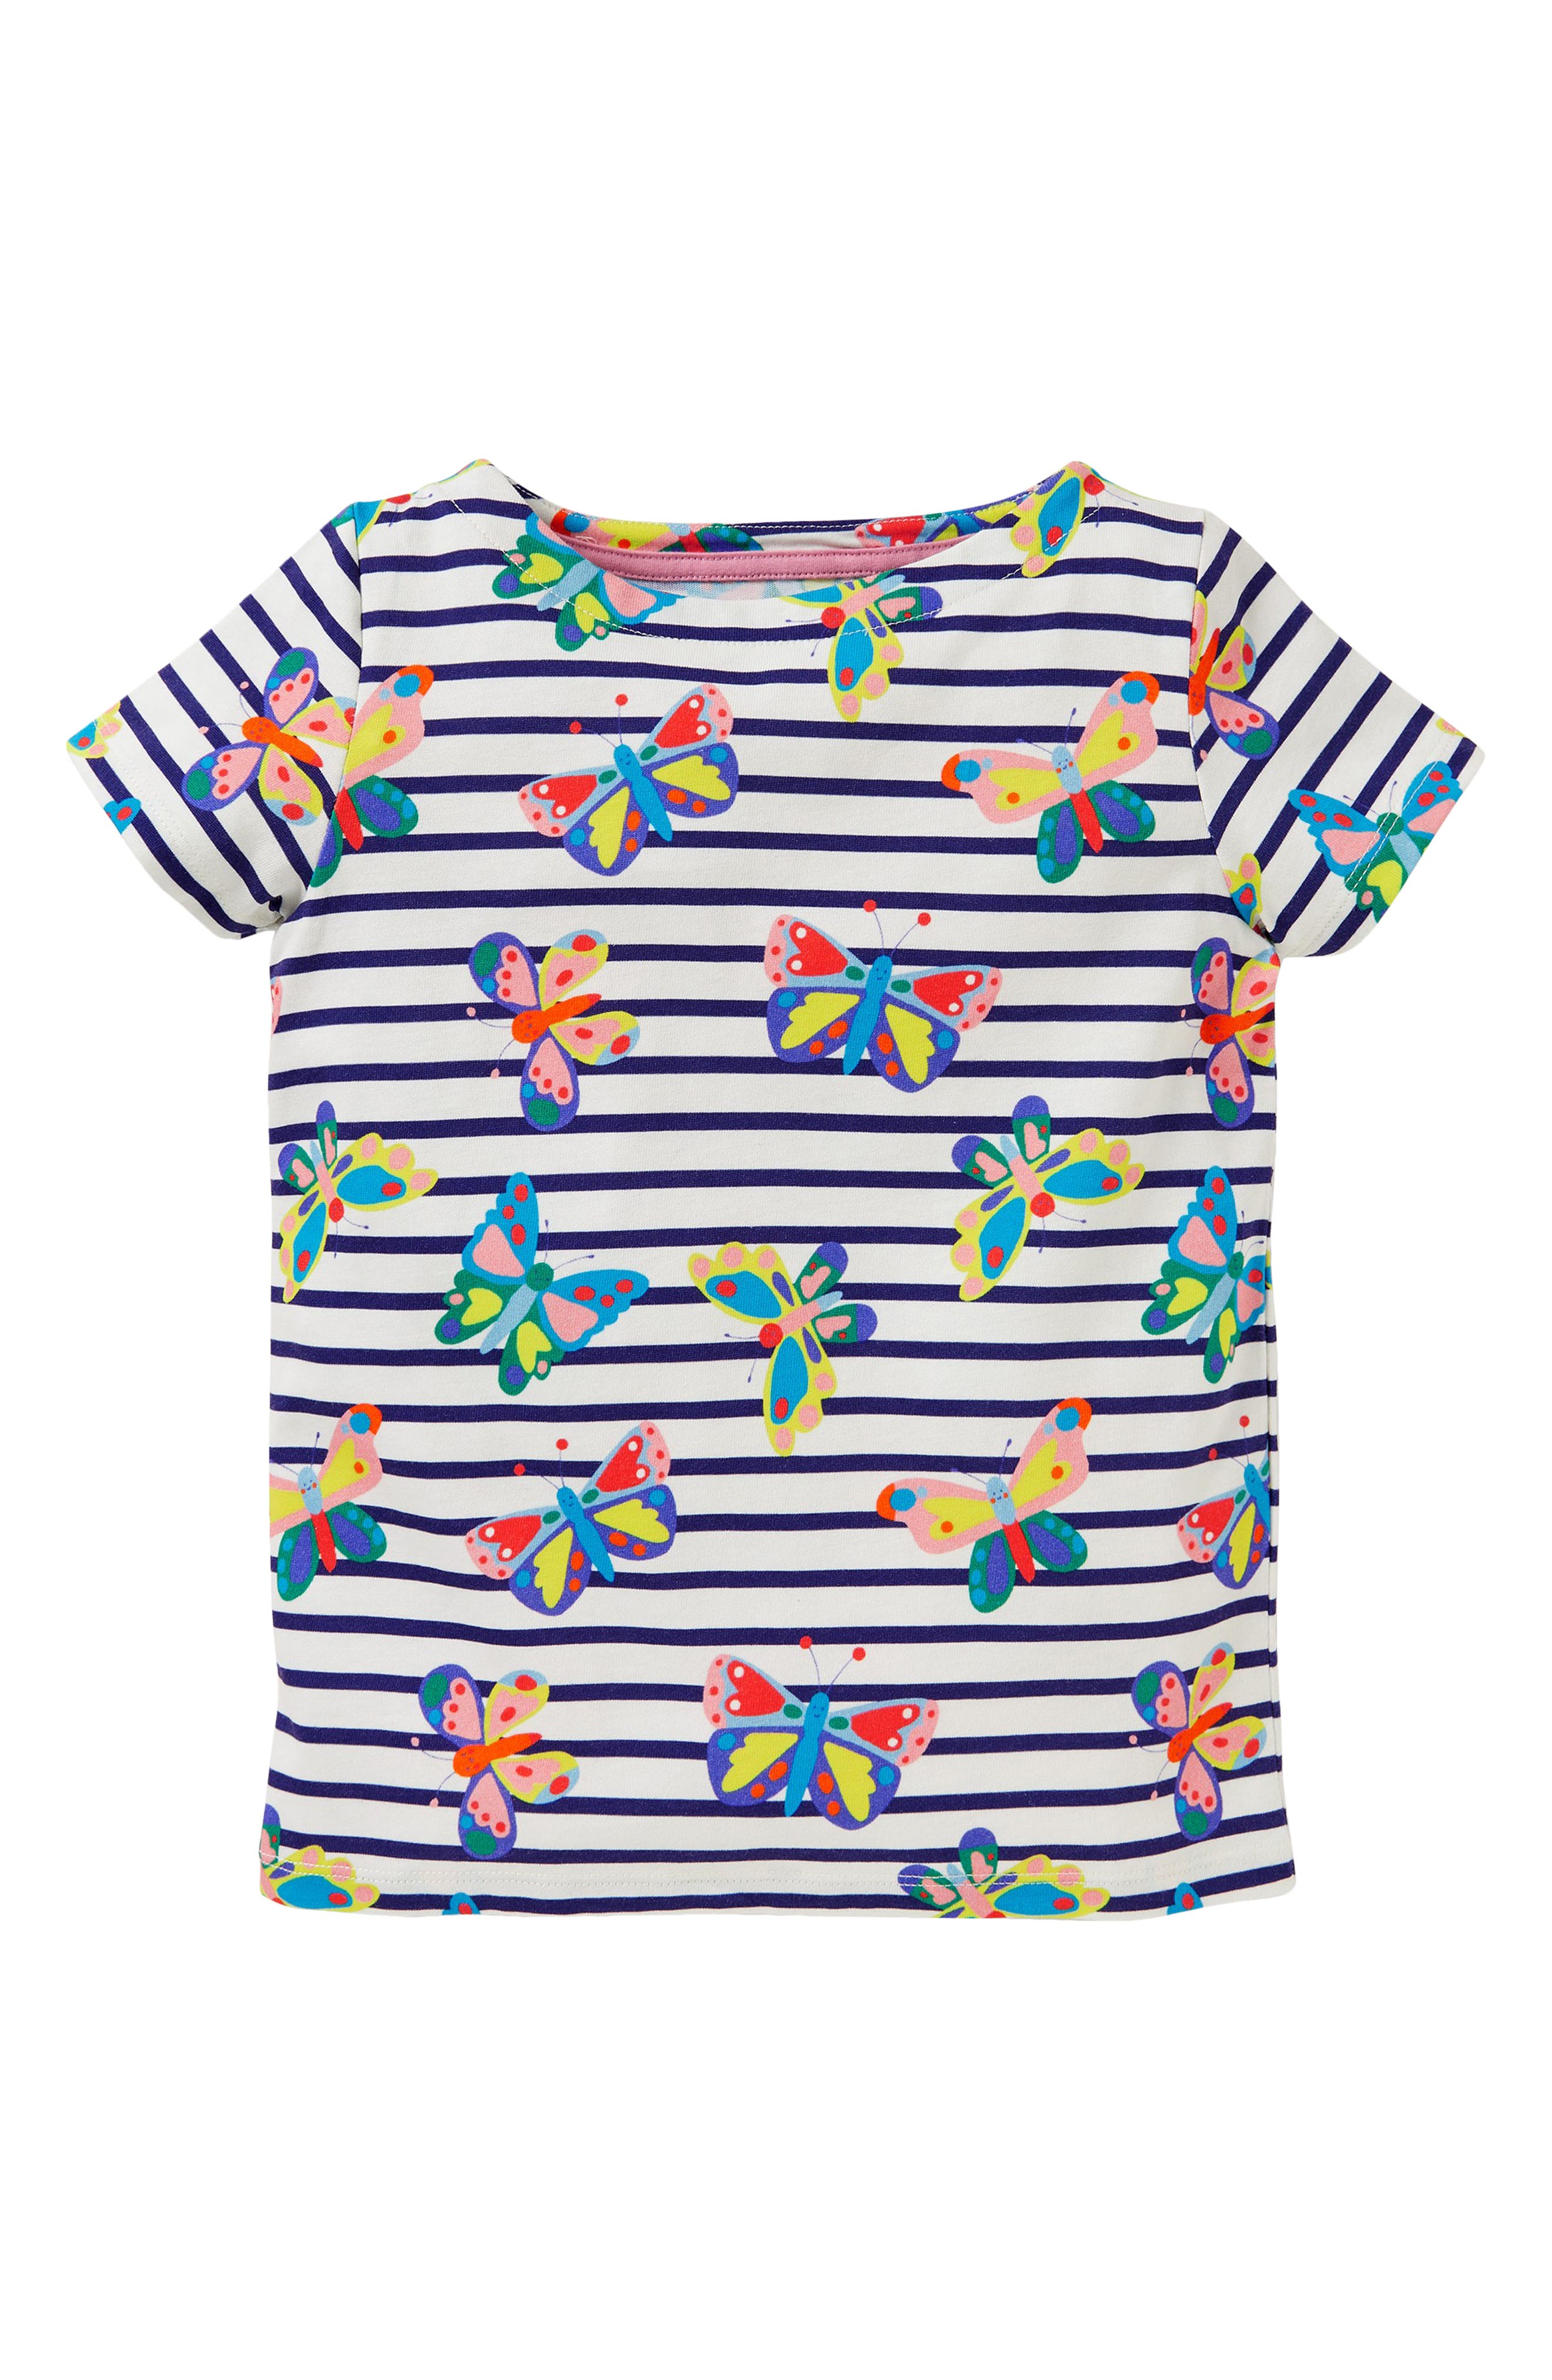 Mini Boden Boys vintage stripe slub cotton tees t-shirt short sleeve summer 